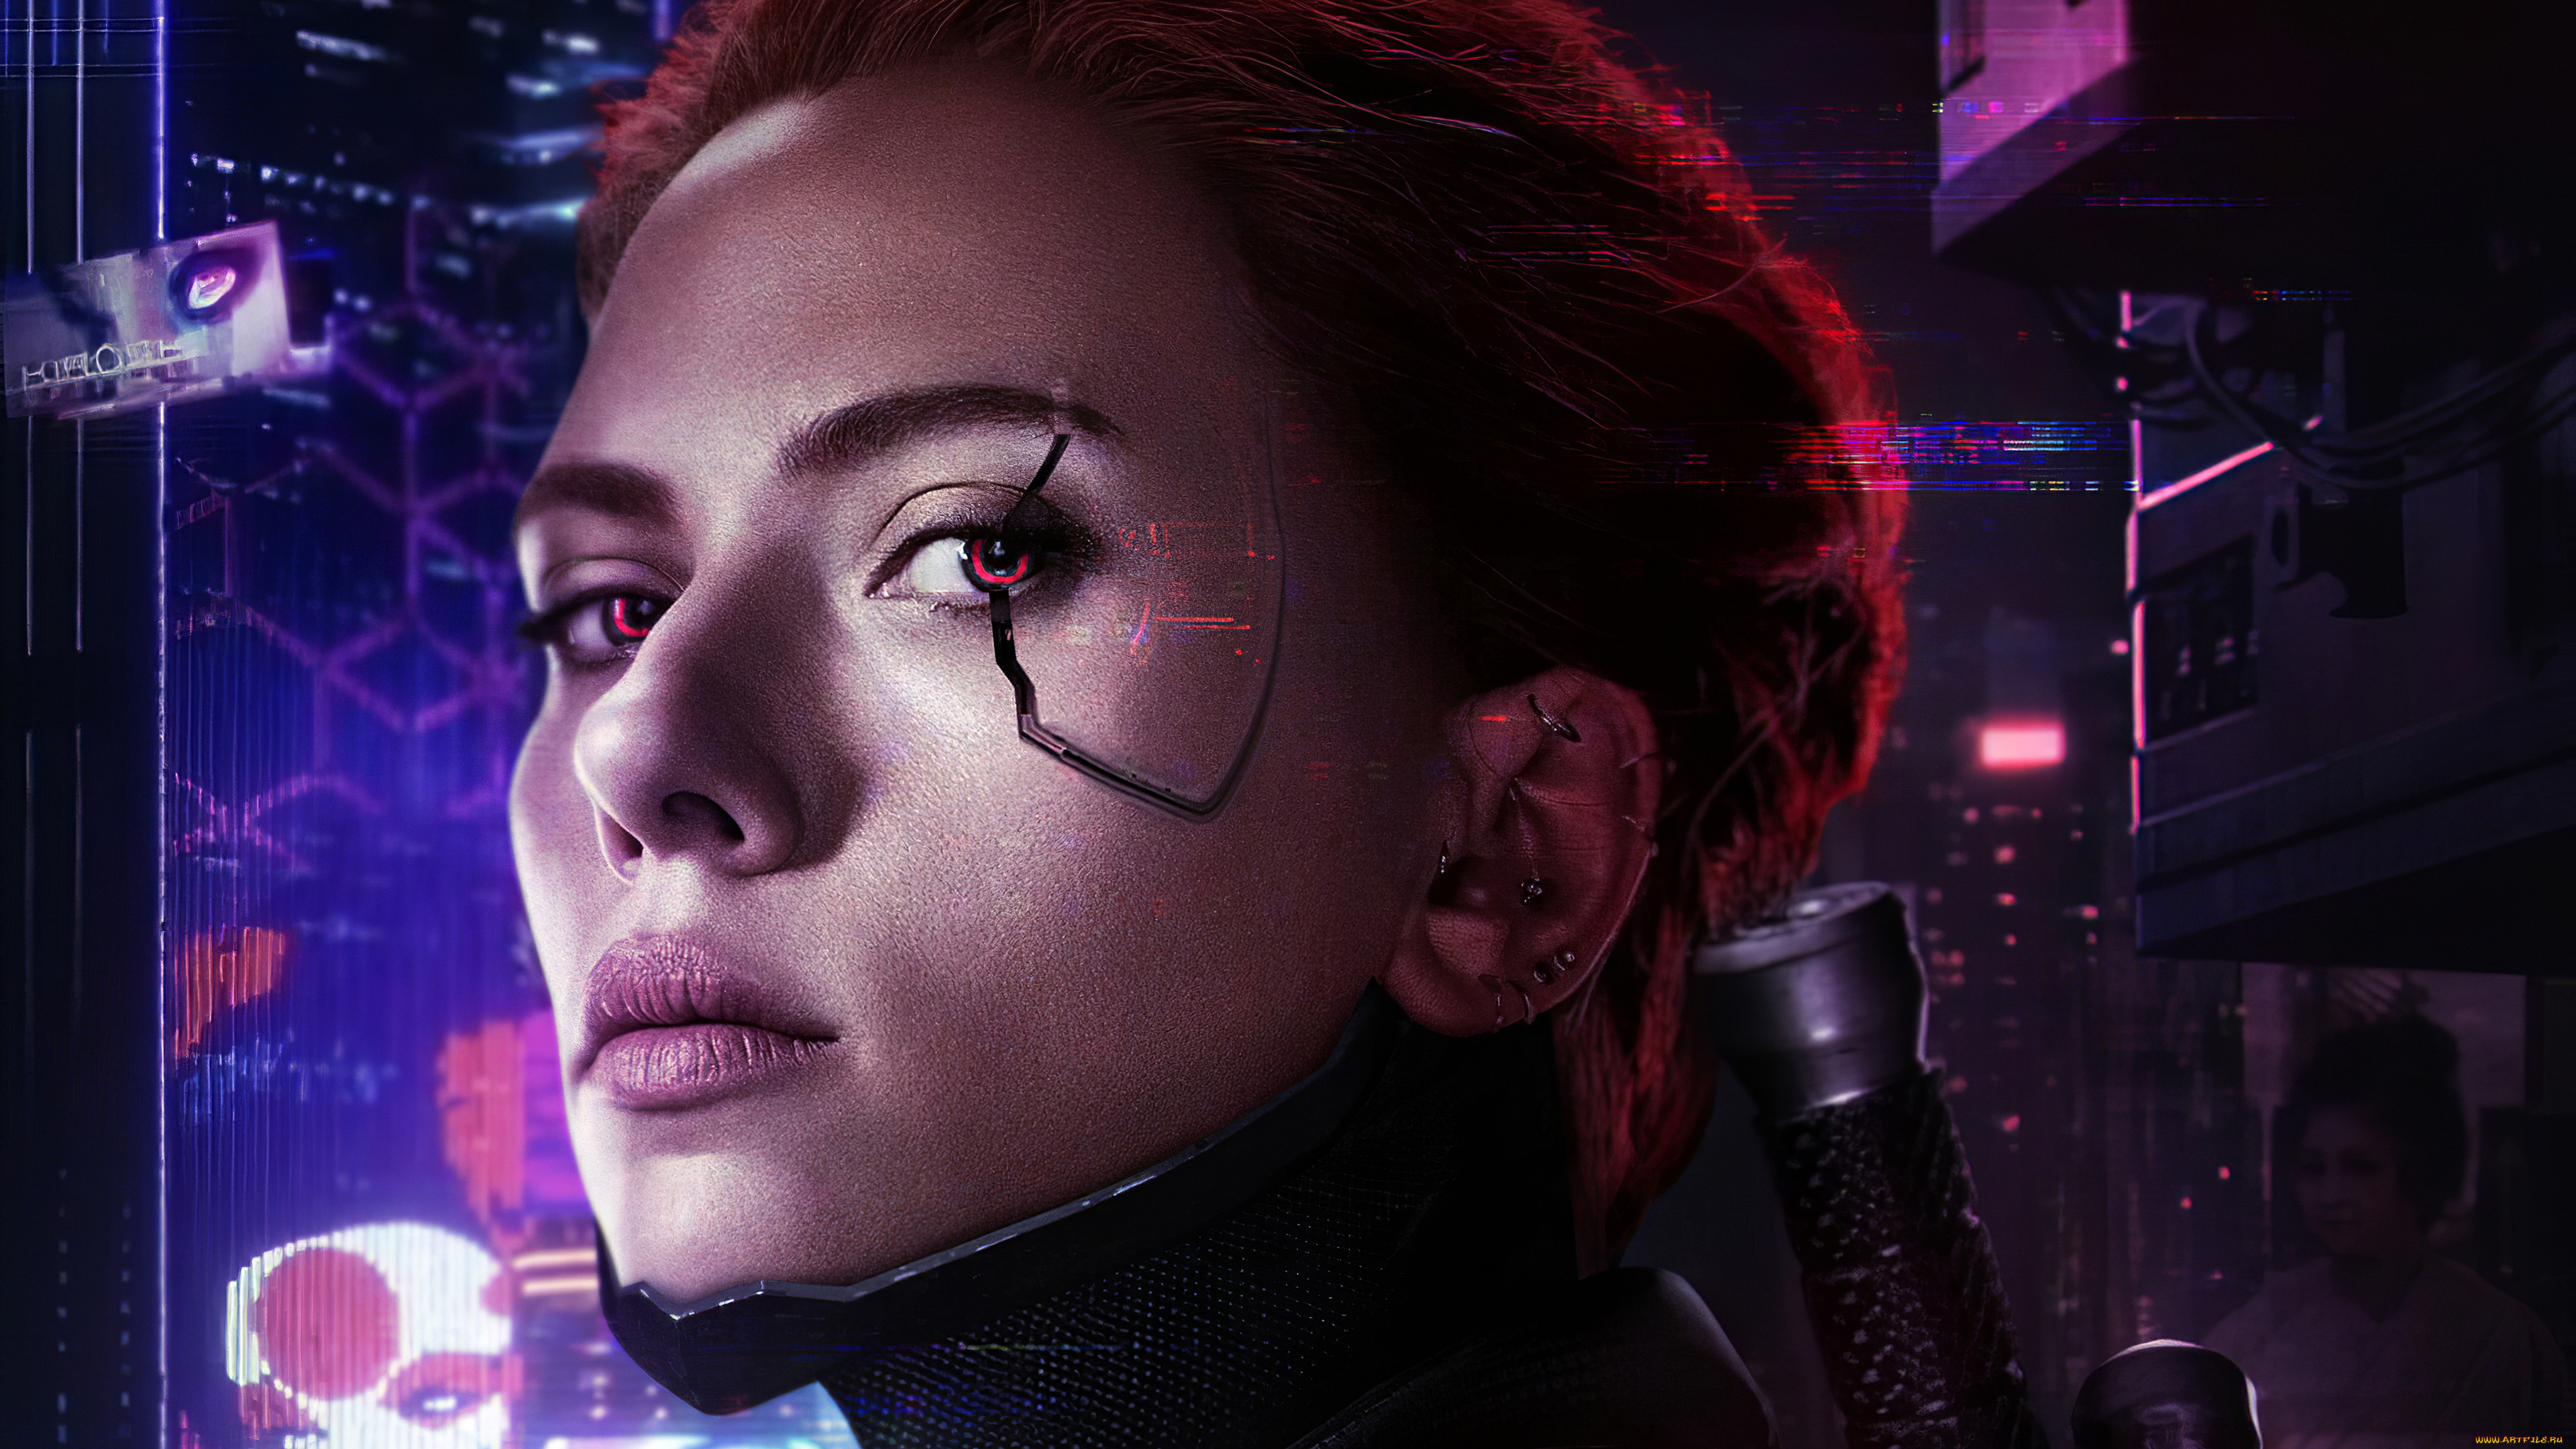 Лицо вдовы. Спайдер Мерфи Cyberpunk 2077. Cyberpunk 2077 Джейд. Скарлетт Йоханссон Cyberpunk 2077. Cyberpunk 2077 Murphy.